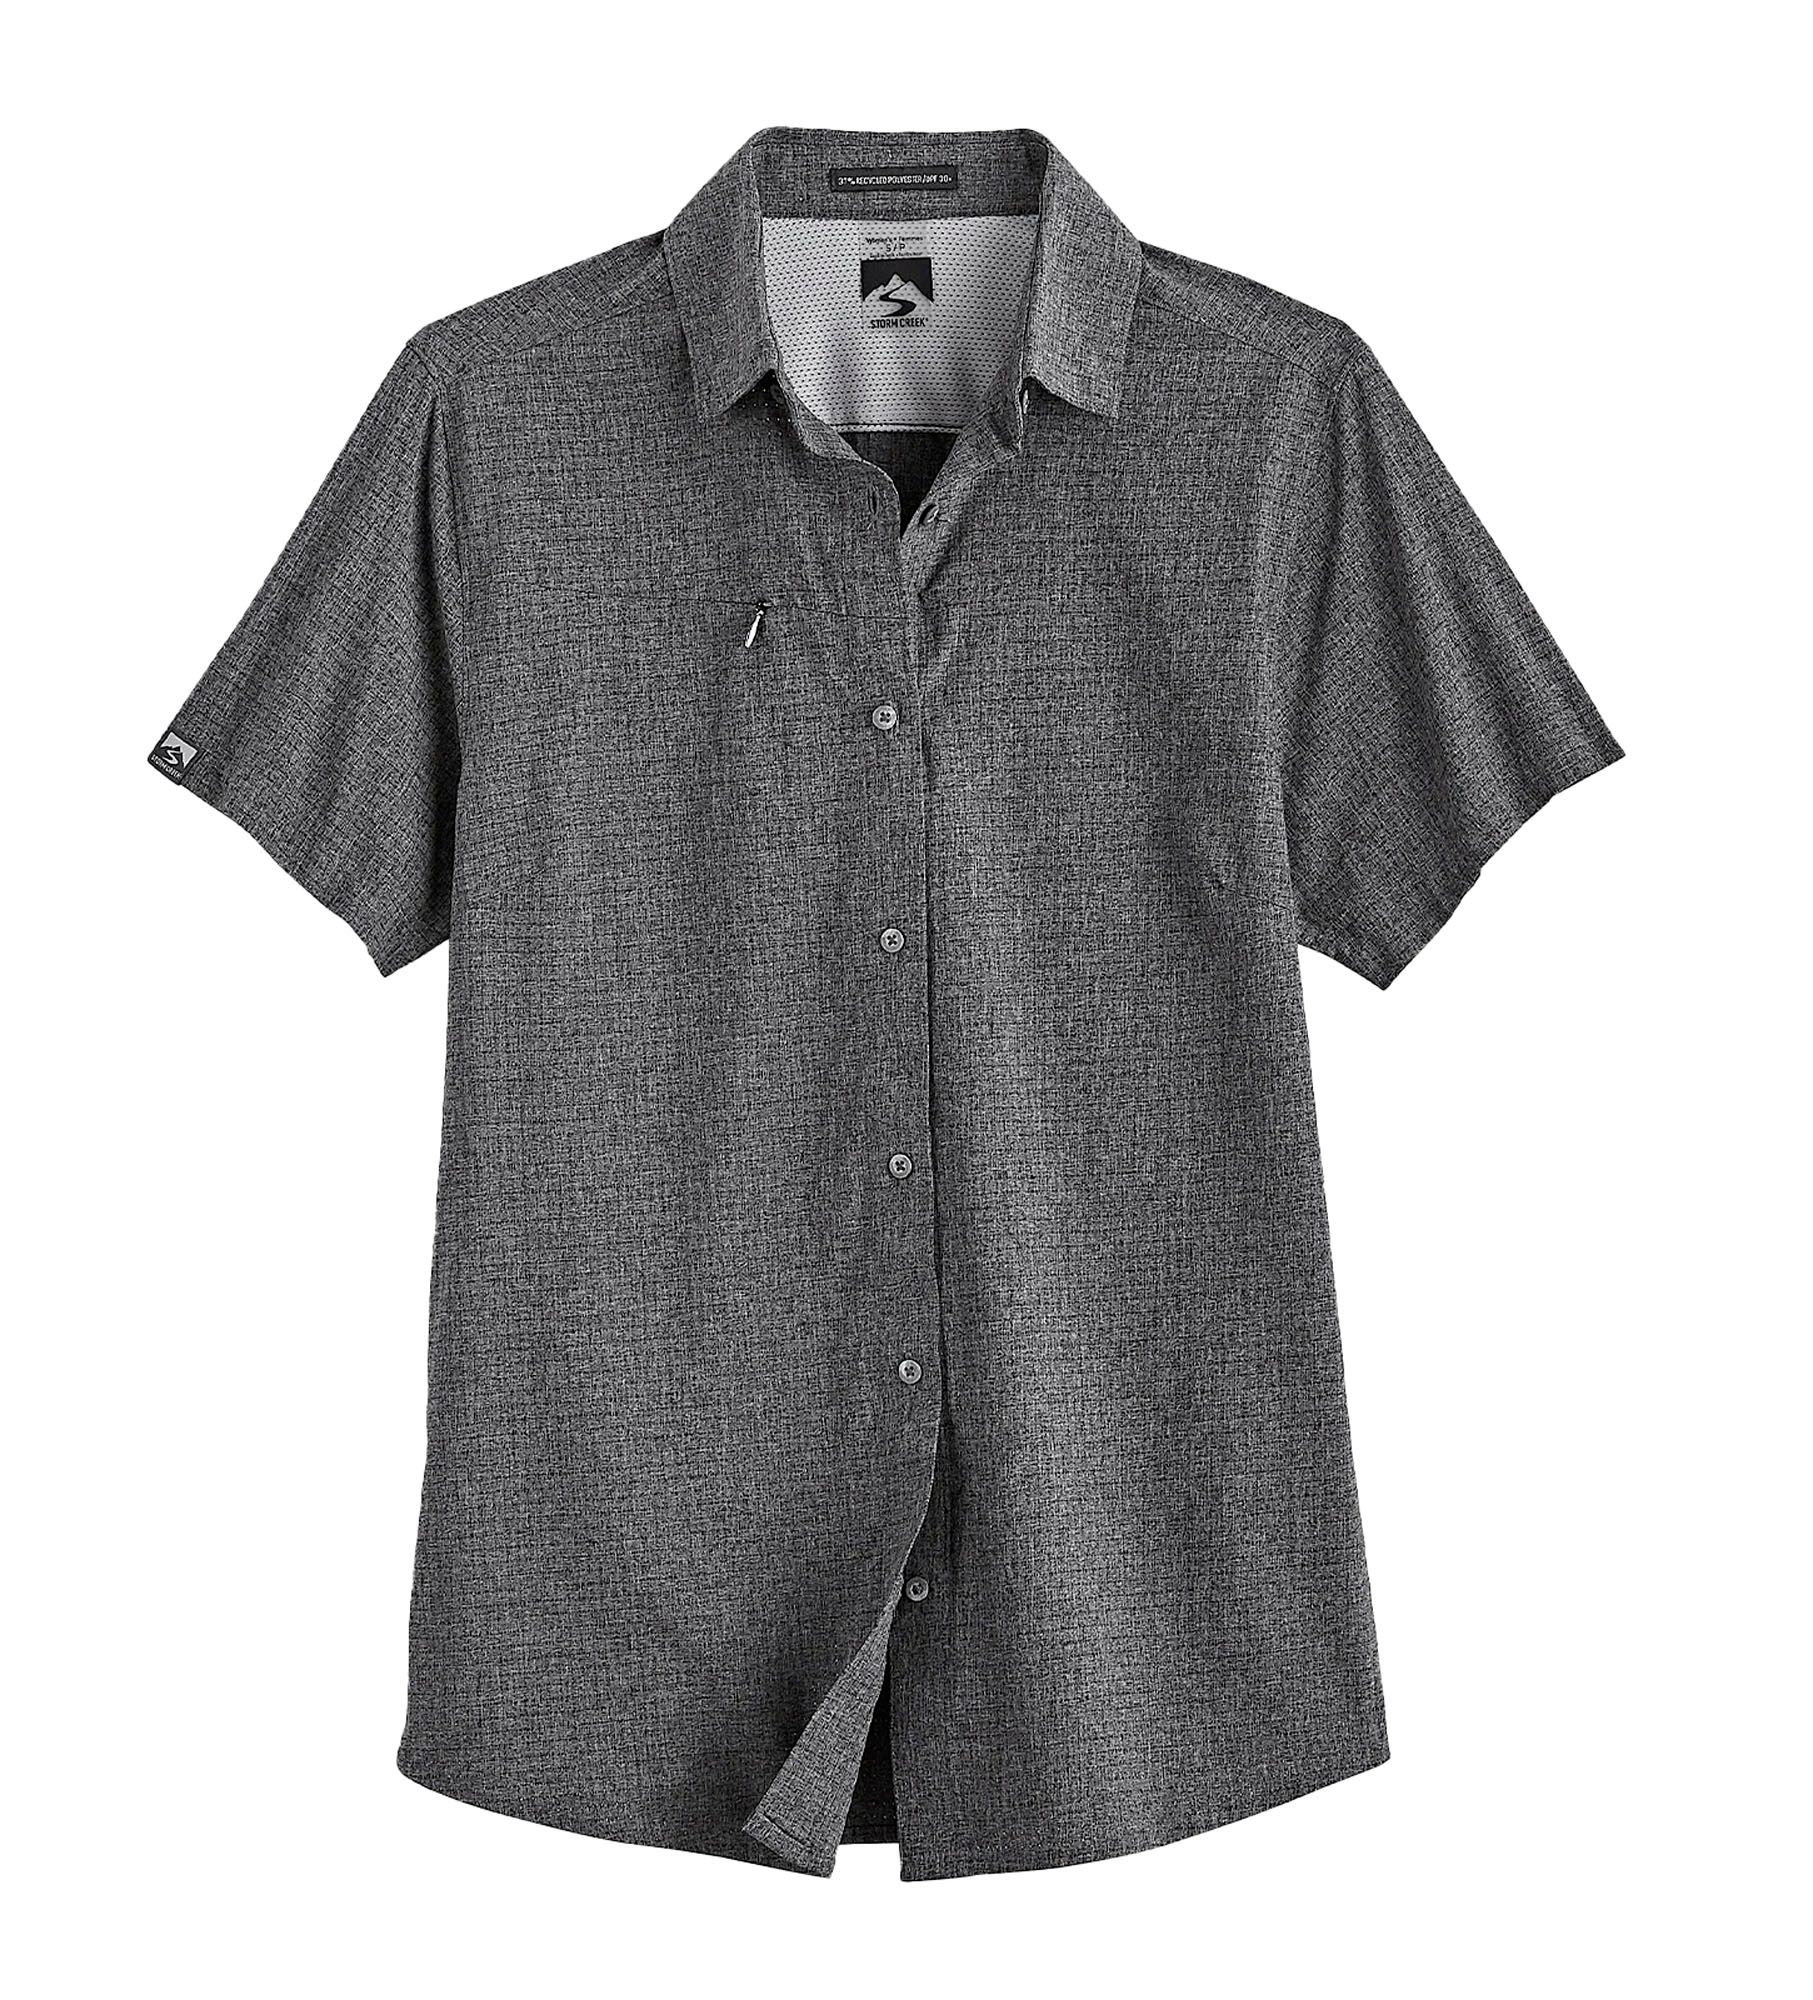 Storm Creek Naturalist Short-Sleeve Shirt for Ladies - Gray - M